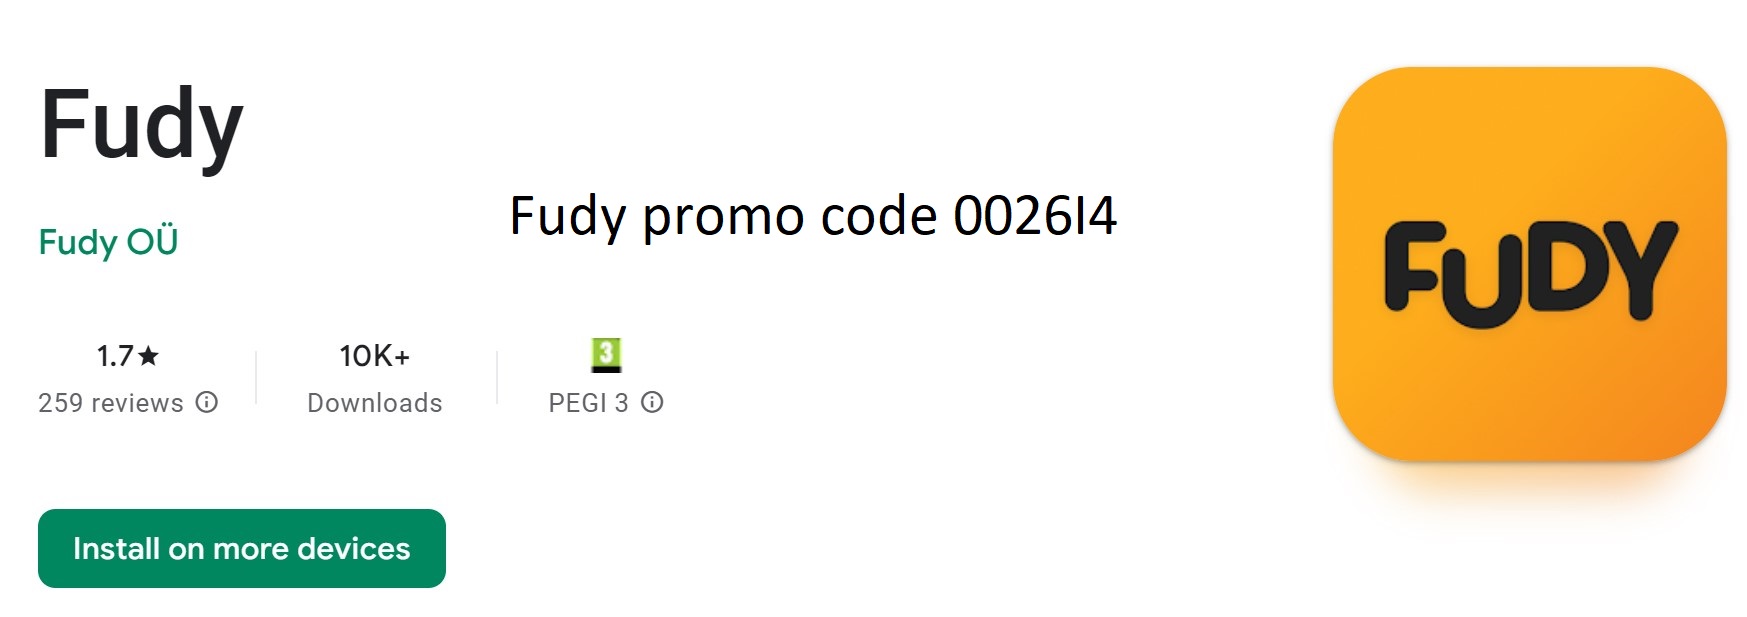 fudy discount code promo